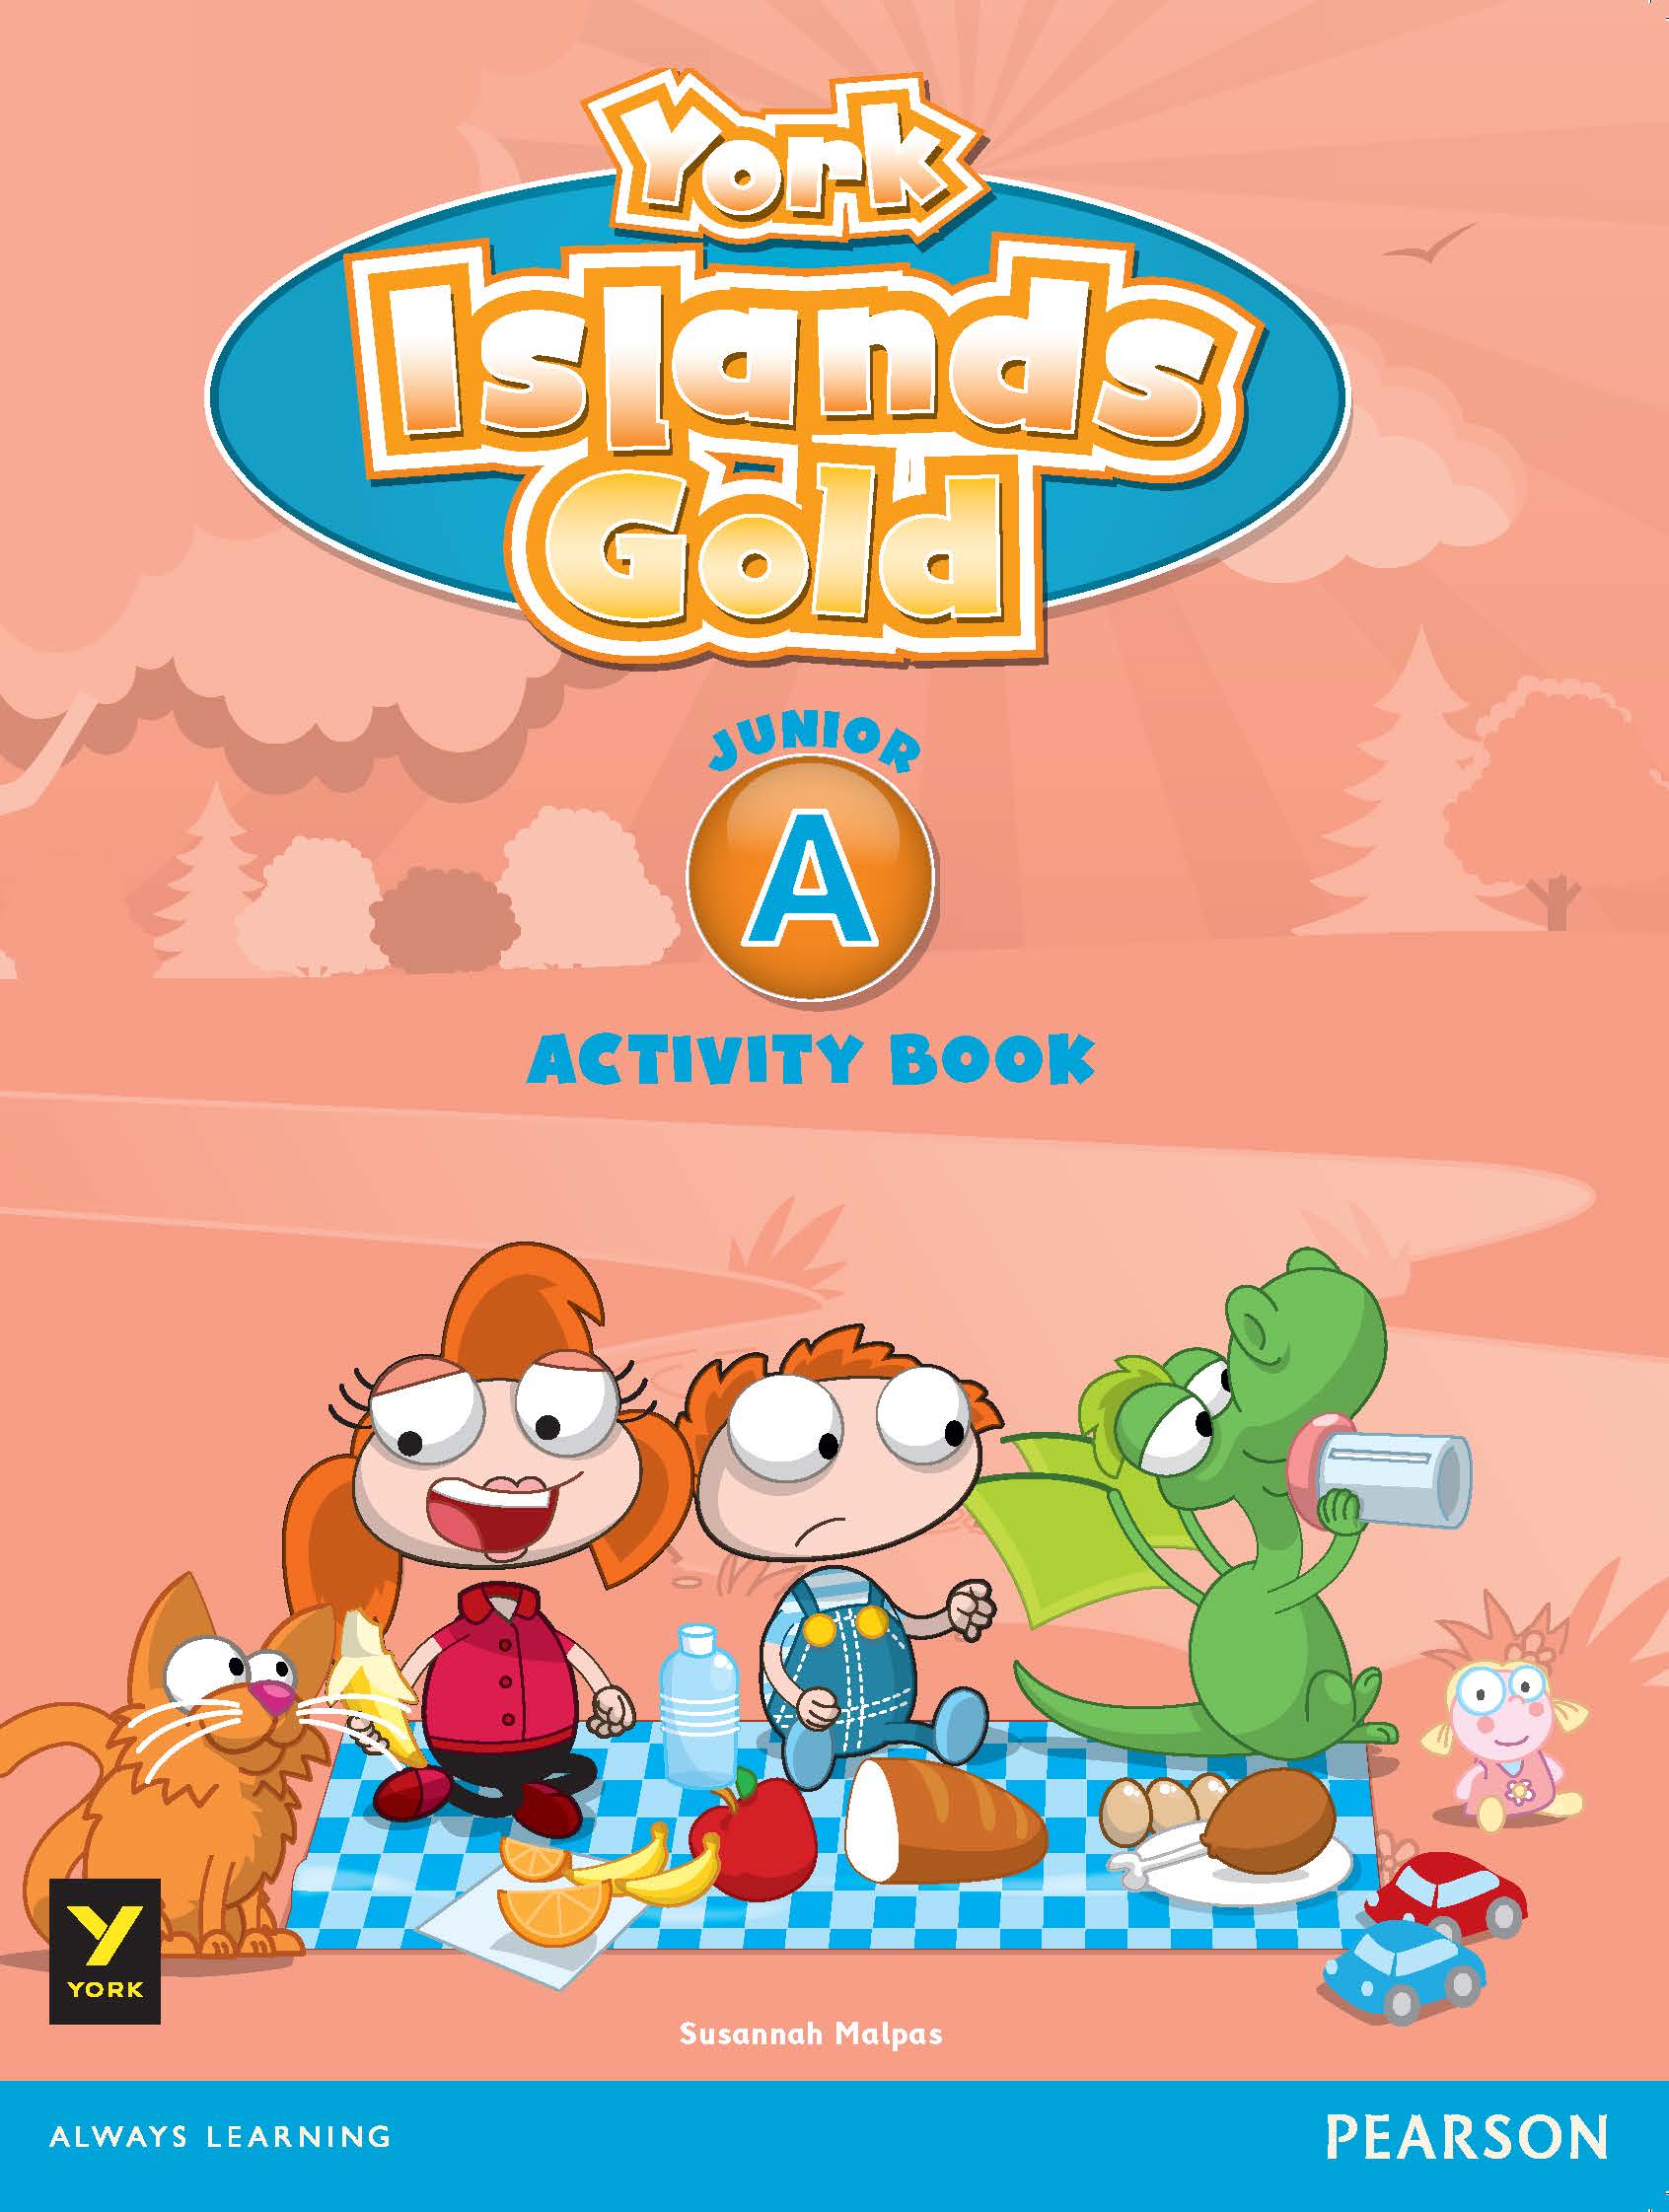 YORK ISLANDS GOLD JUNIOR A ACTIVITY BOOK (+ STICKERS)